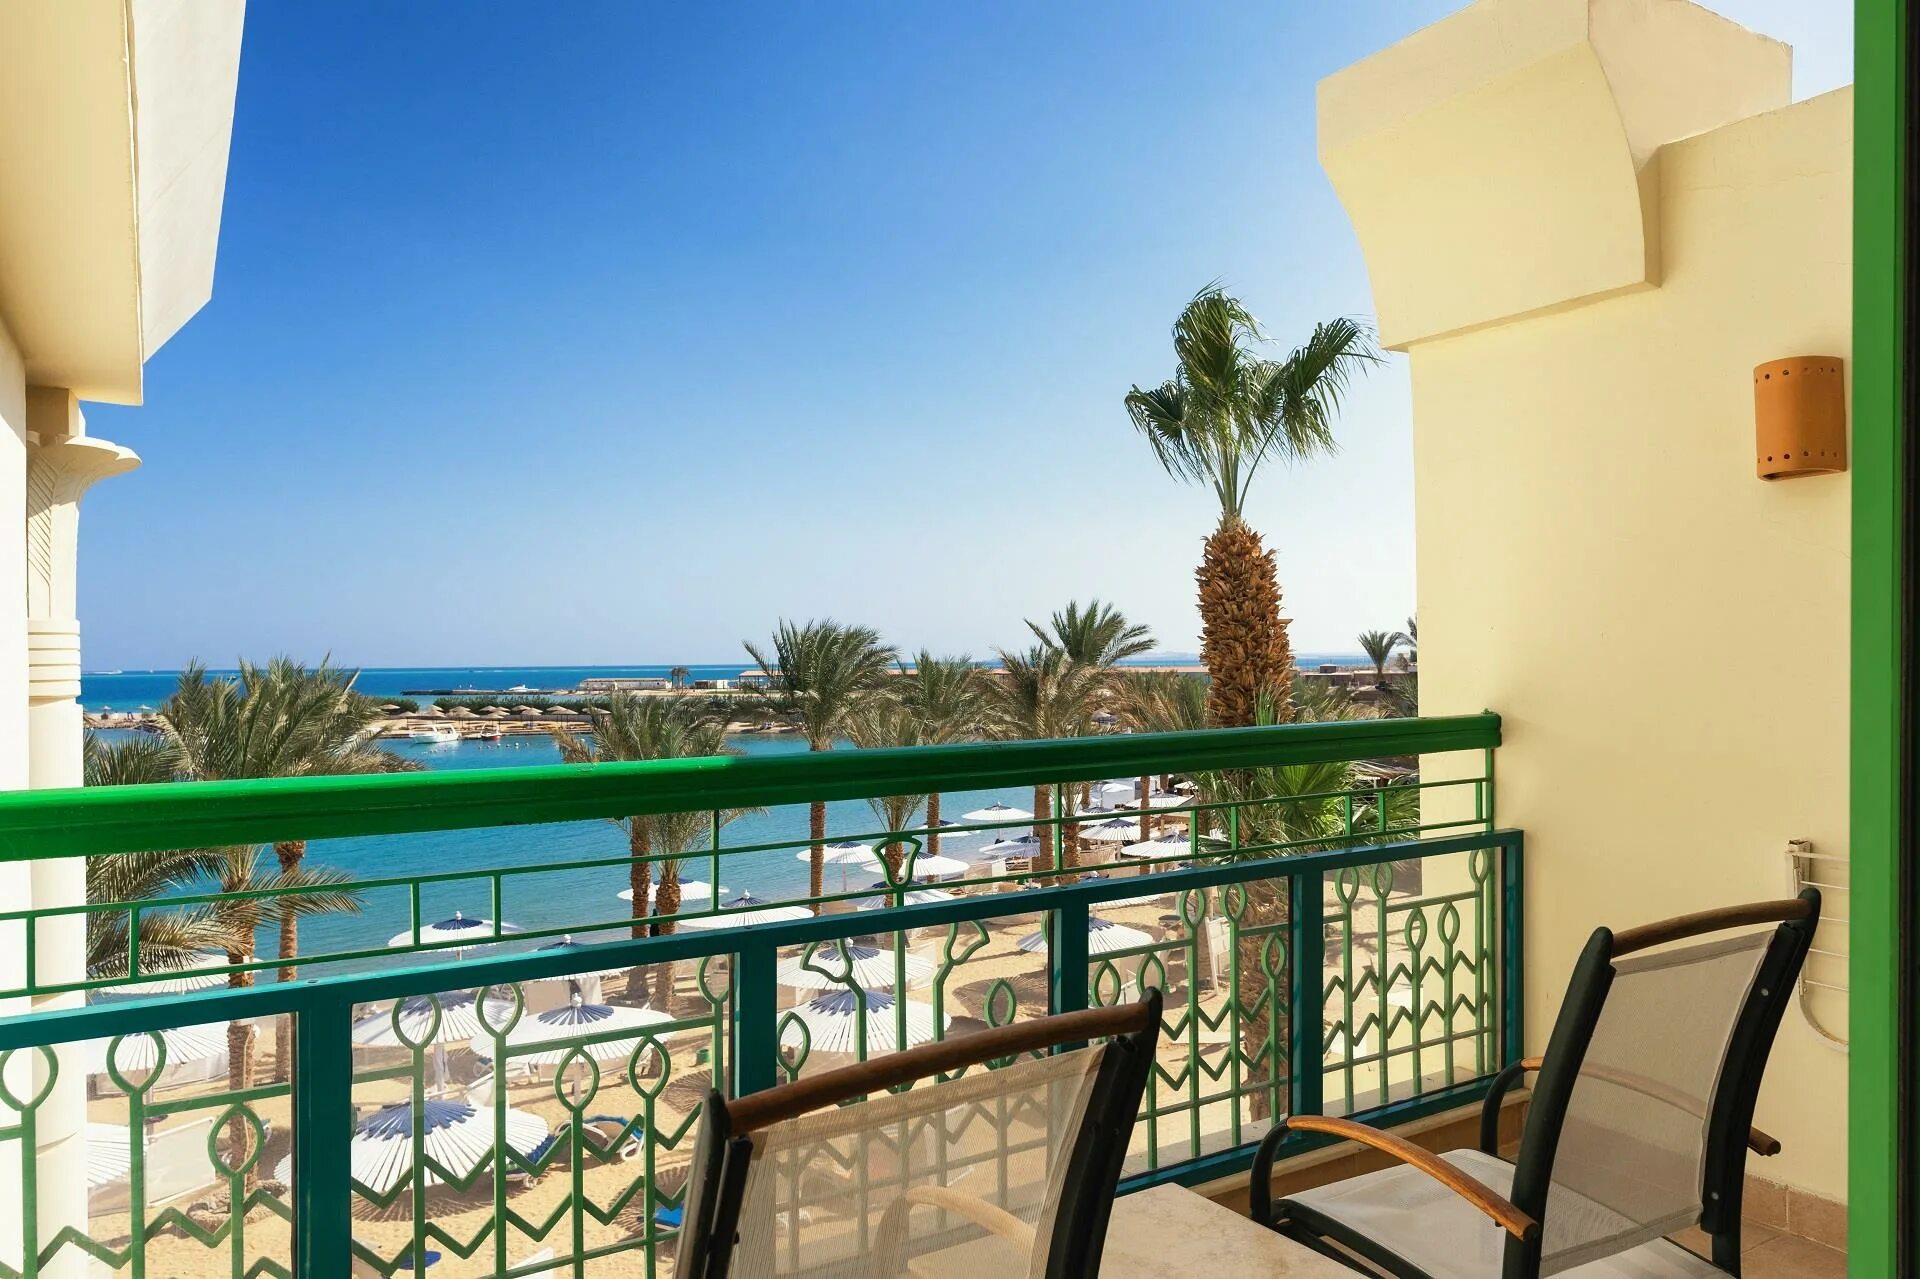 Хургада hurghada swiss inn hurghada. Swiss Inn Resort Hurghada 5 Египет. Свисс ИНН Хургада. Swiss in Hurghada 5.